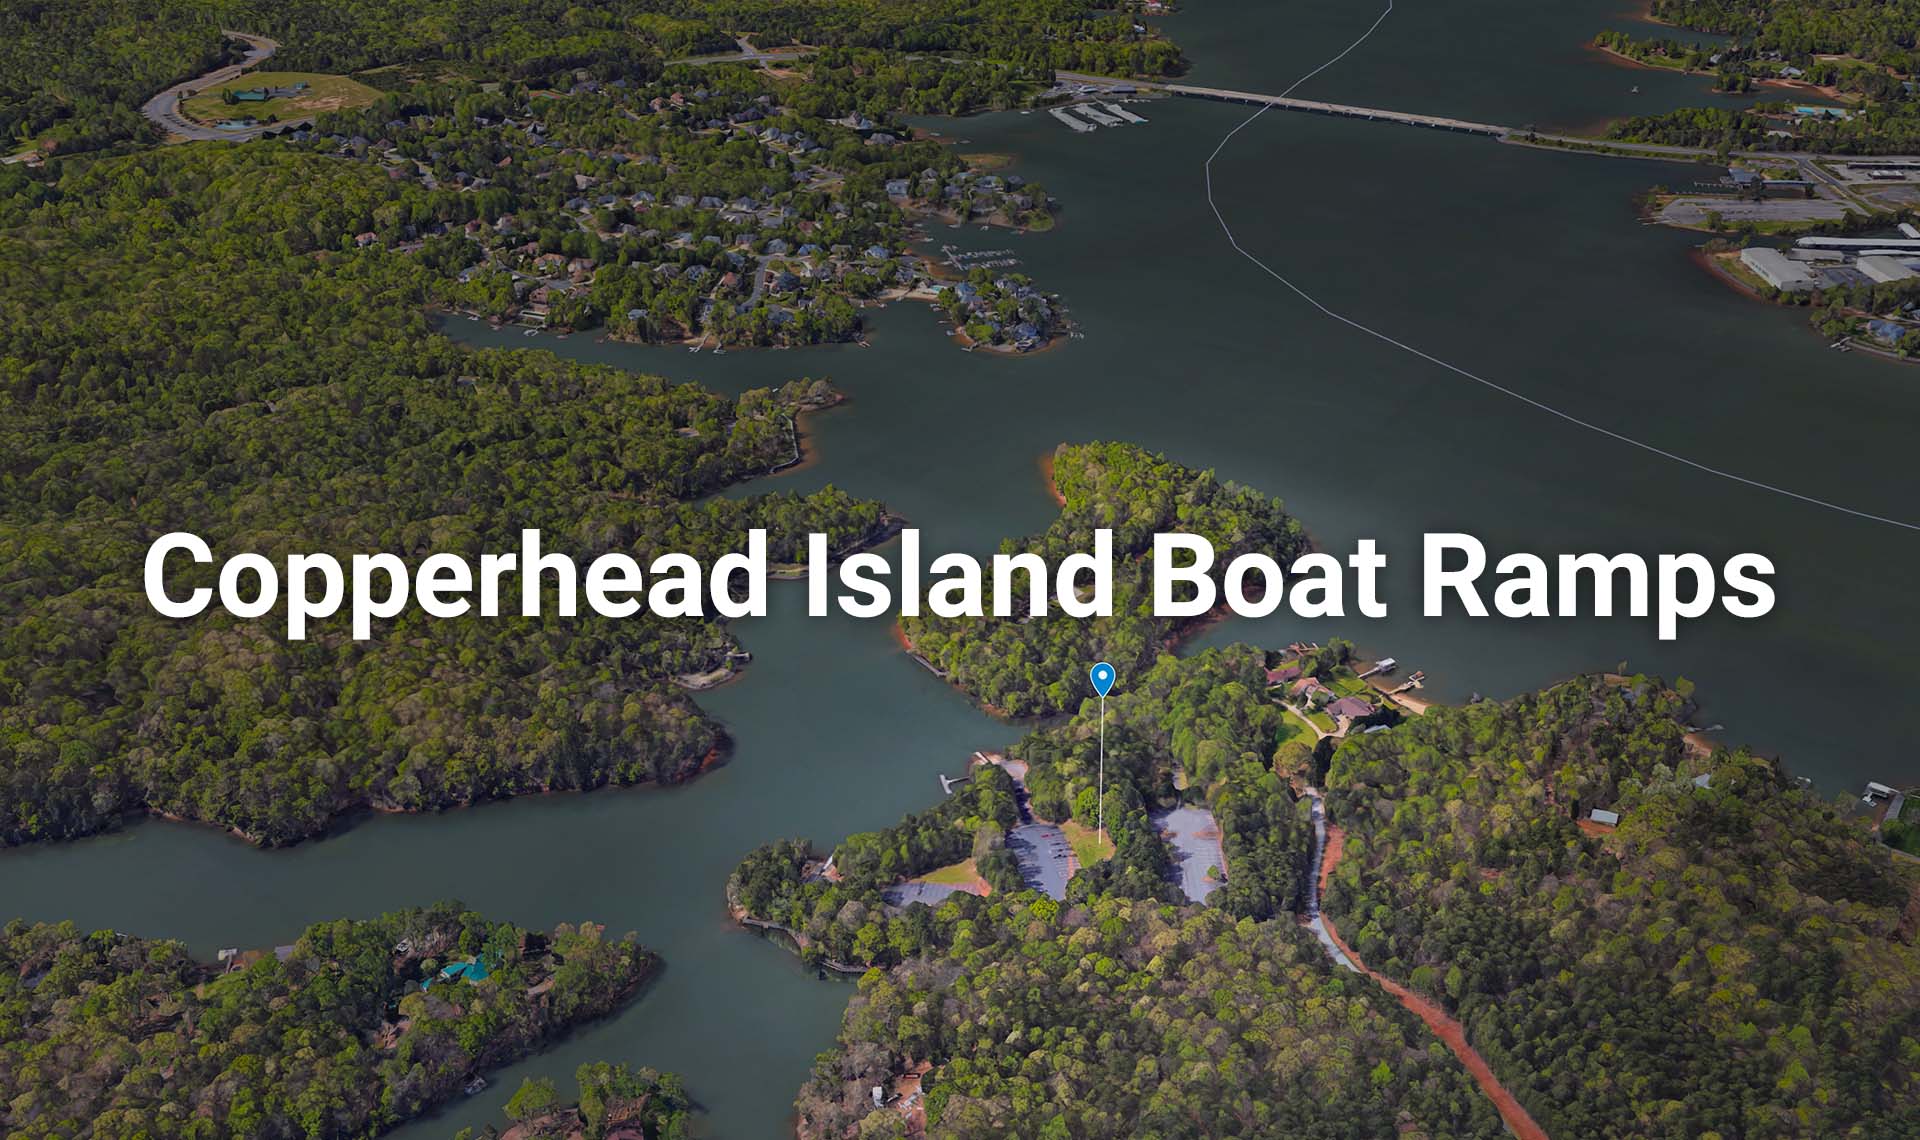 Lake Wylie Carolinas - Copperhead Island Boat Ramps